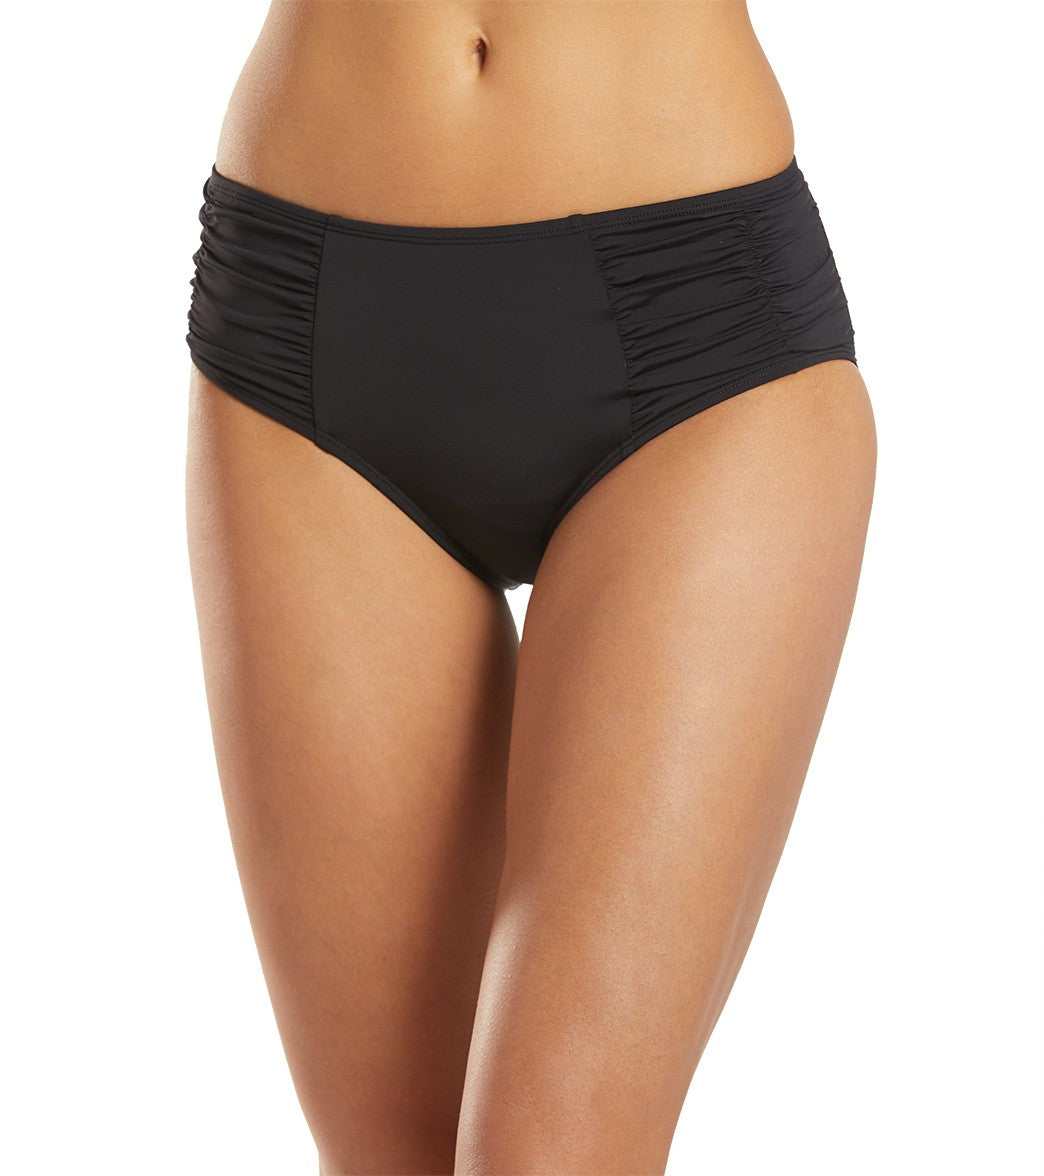 Skye Solid Alessia High Waisted Bikini Bottom - Black X-Small - Swimoutlet.com